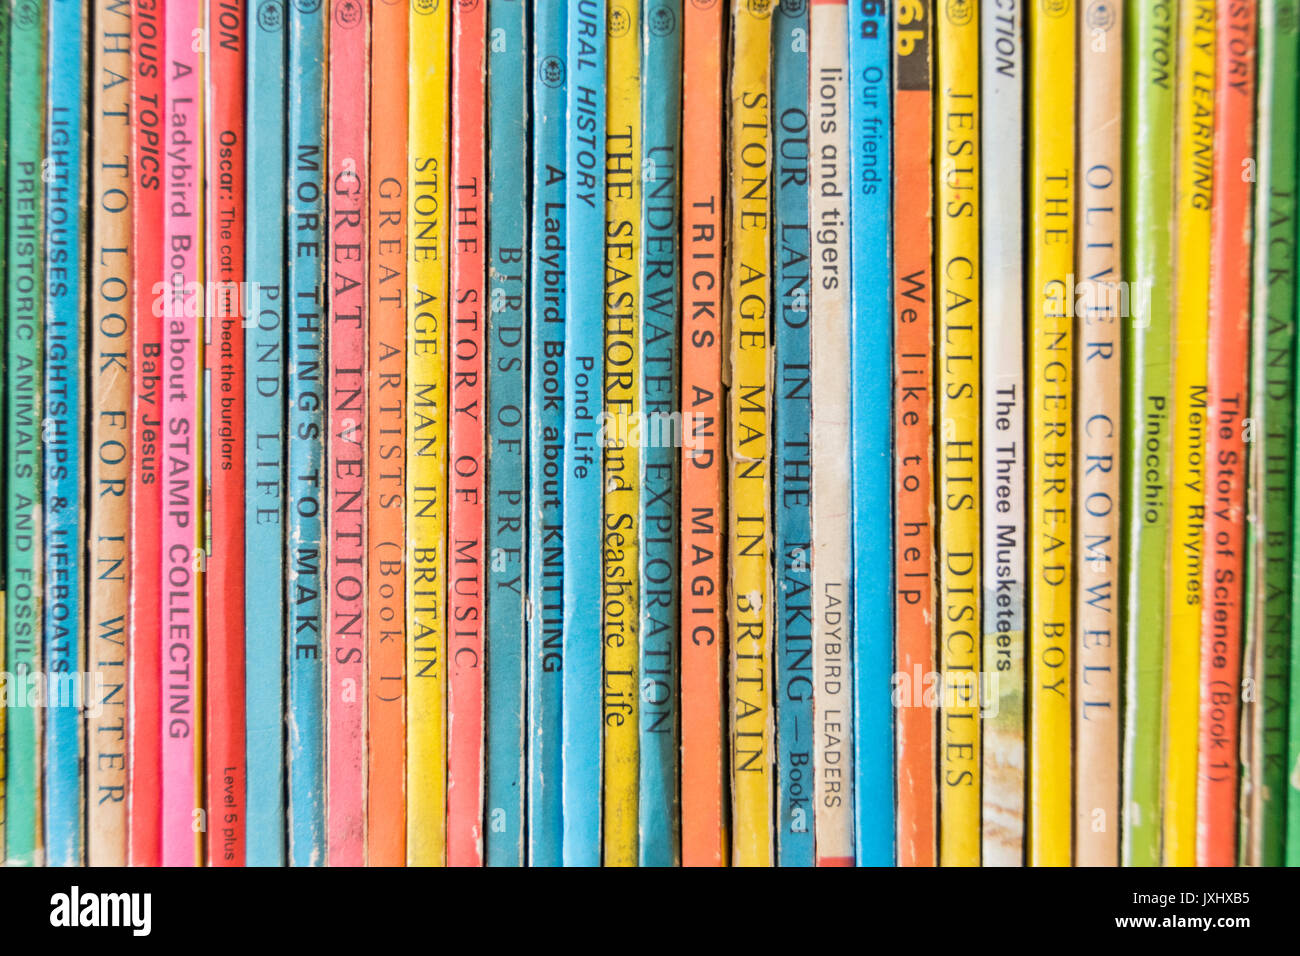 A bookshelf of slightly faded multi-coloured Ladybird books spines Stock Photo